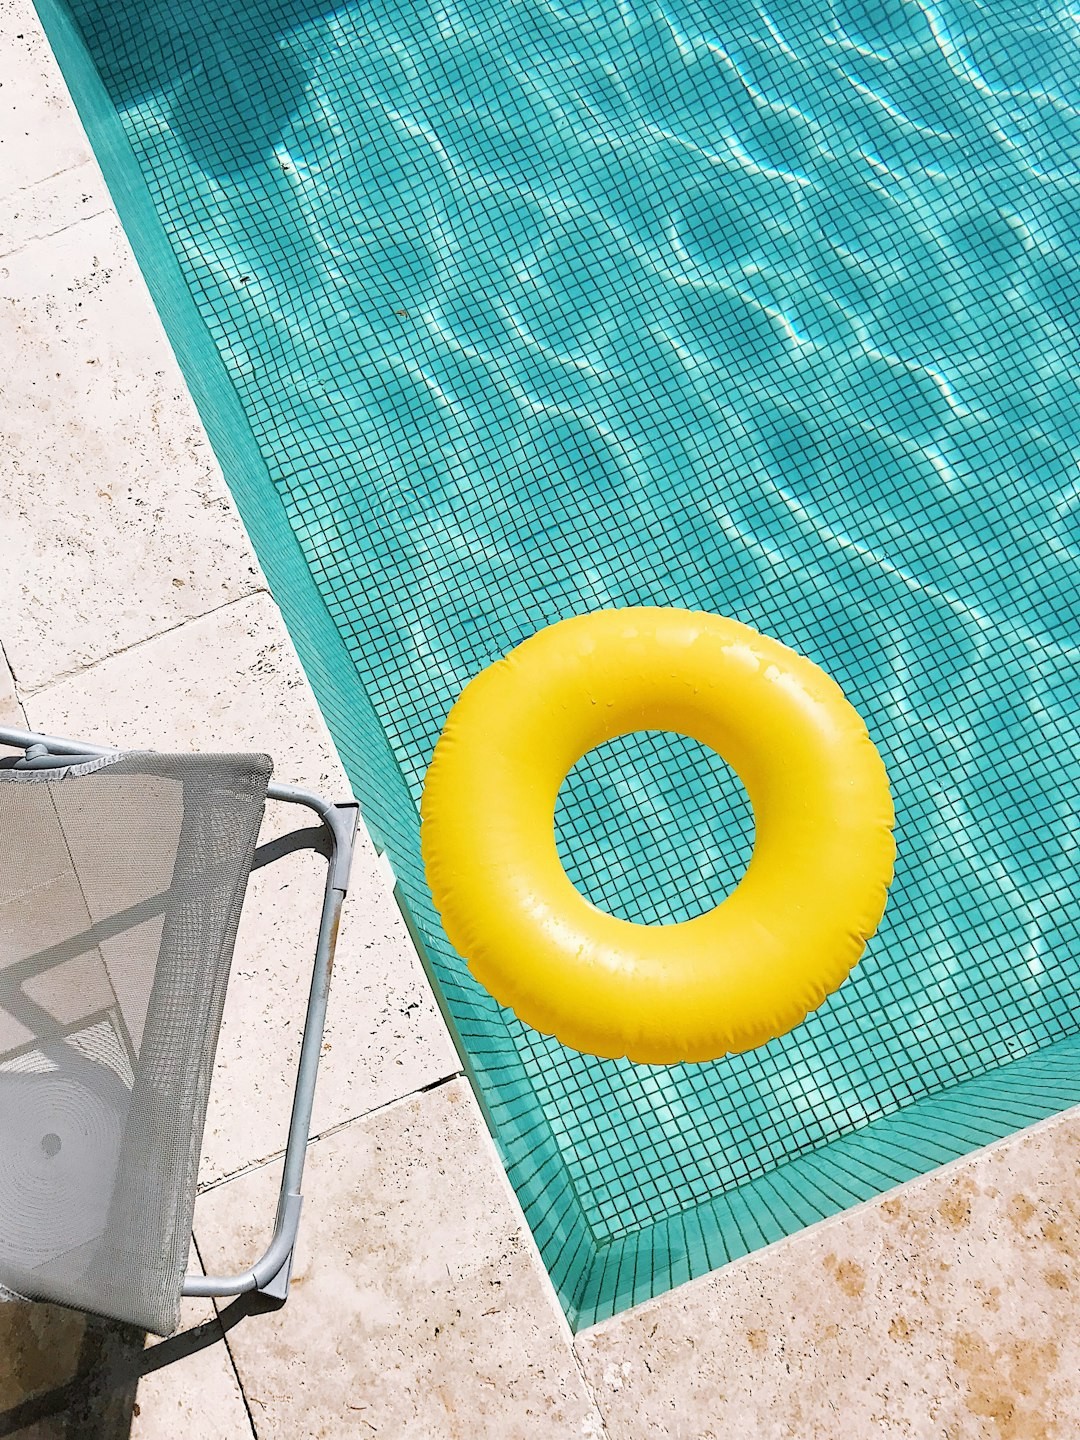 Swimming Pool
#swimmingpool #piscine #color #yellow